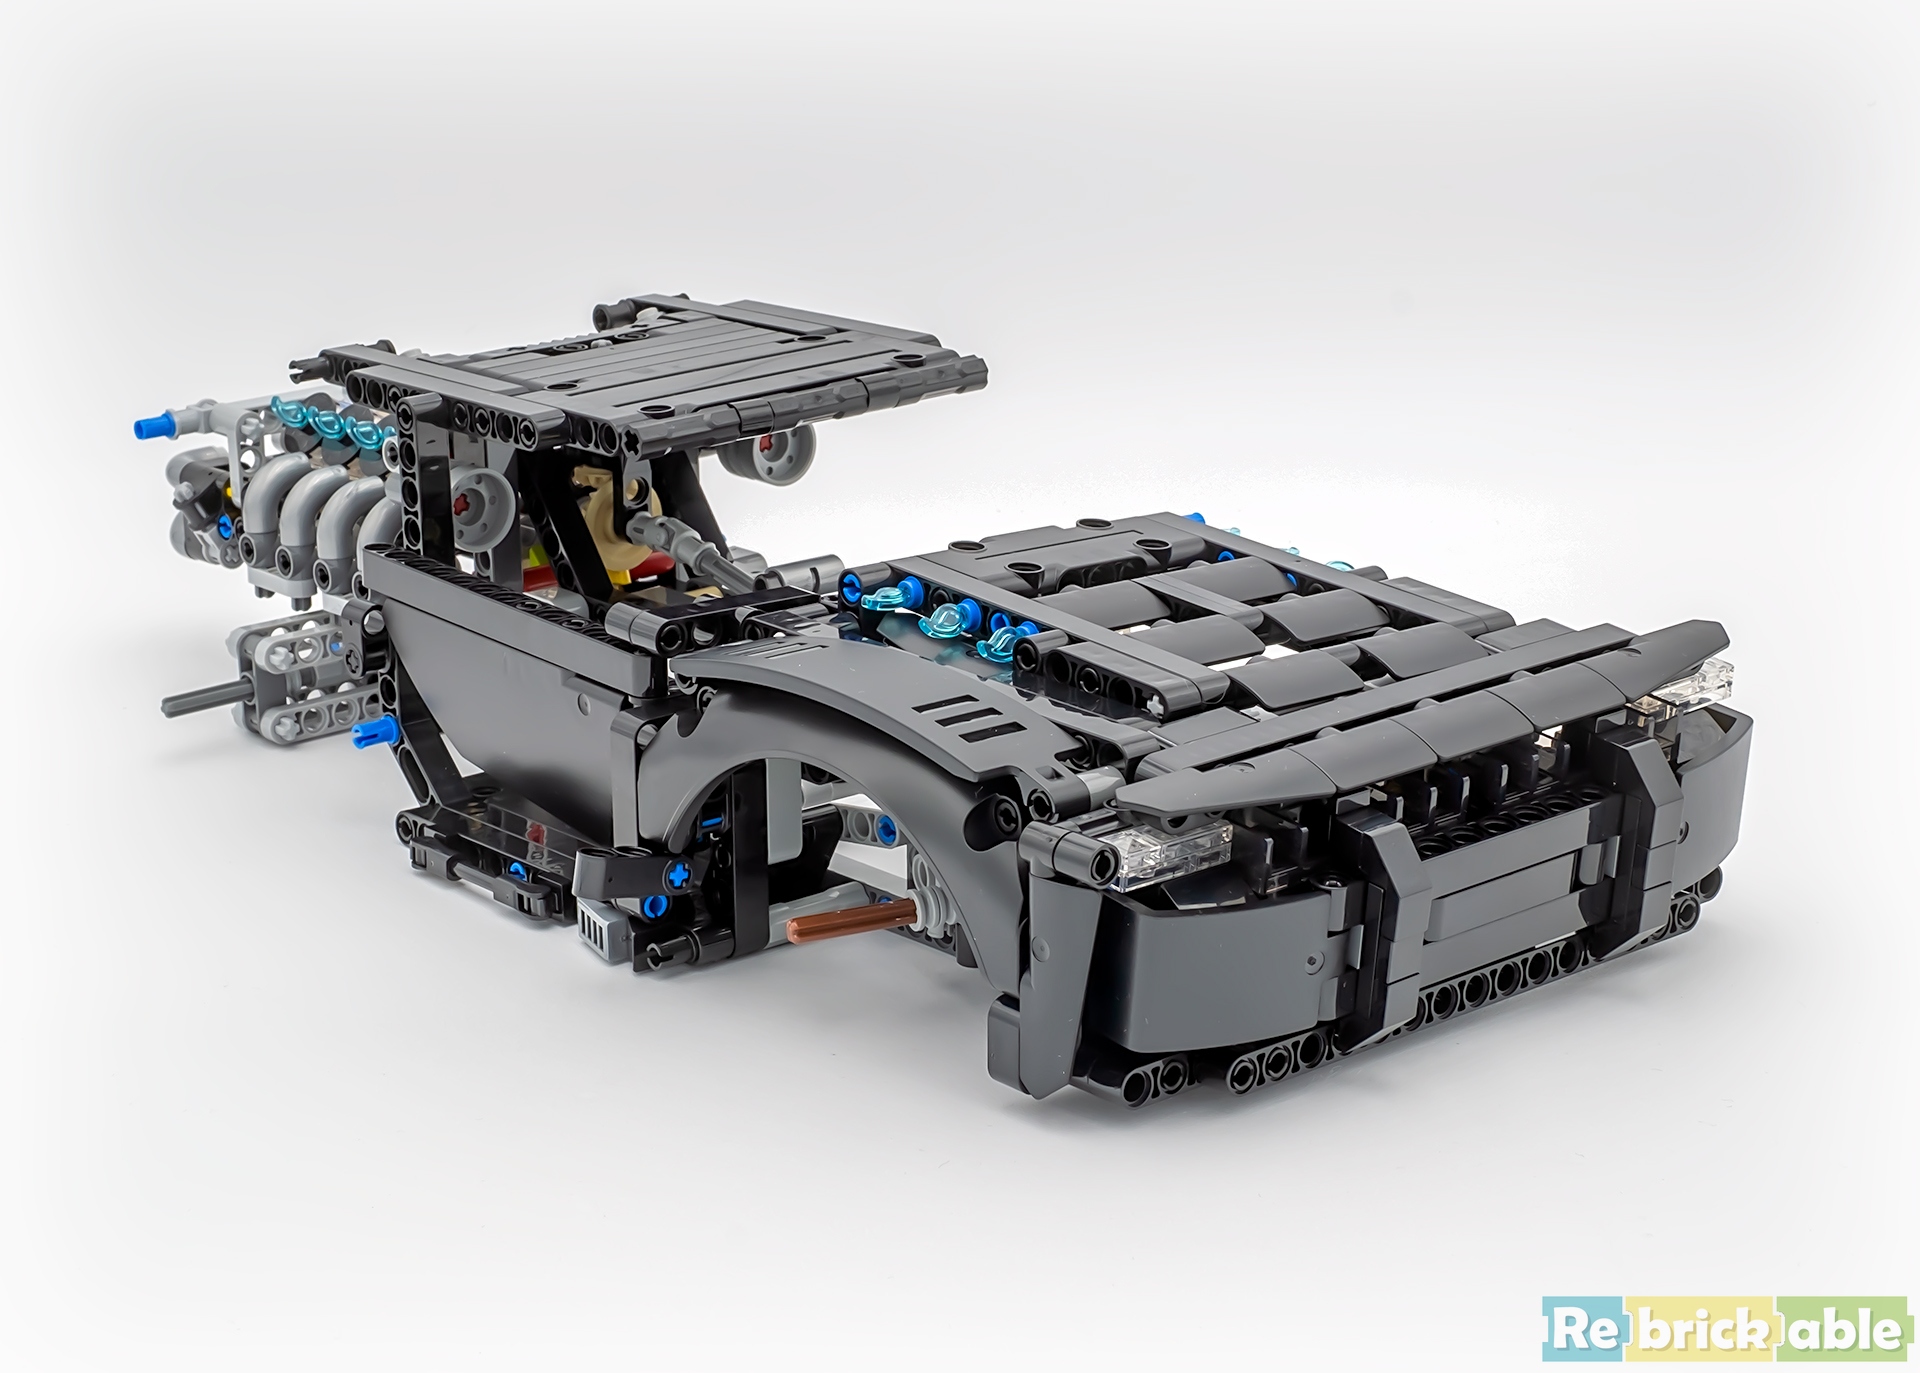  LEGO Technic The Batman – Batmobile 42127 Model Car